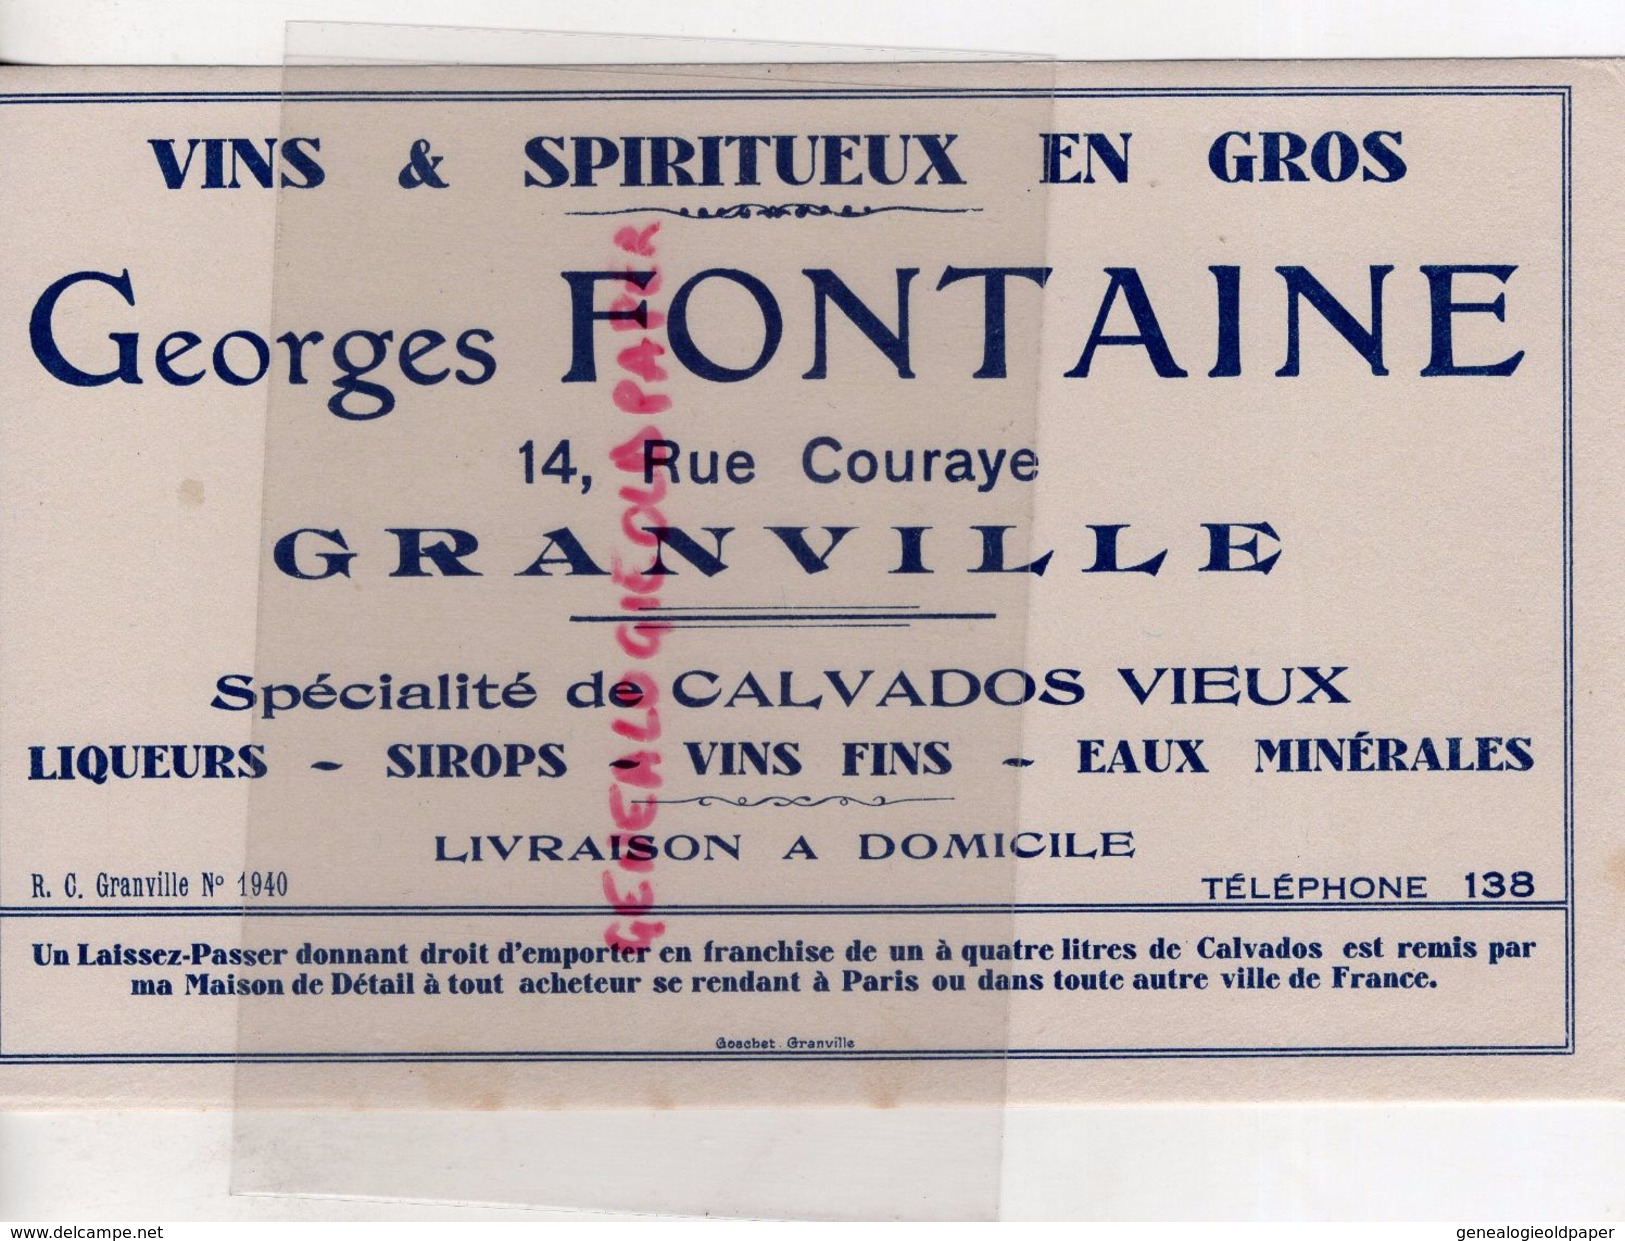 50- GRANVILLE- BUVARD GEORGES FONTAINE-VINS SPIRITUEUX-14 RUE COURAYE- CALVADOS - Levensmiddelen